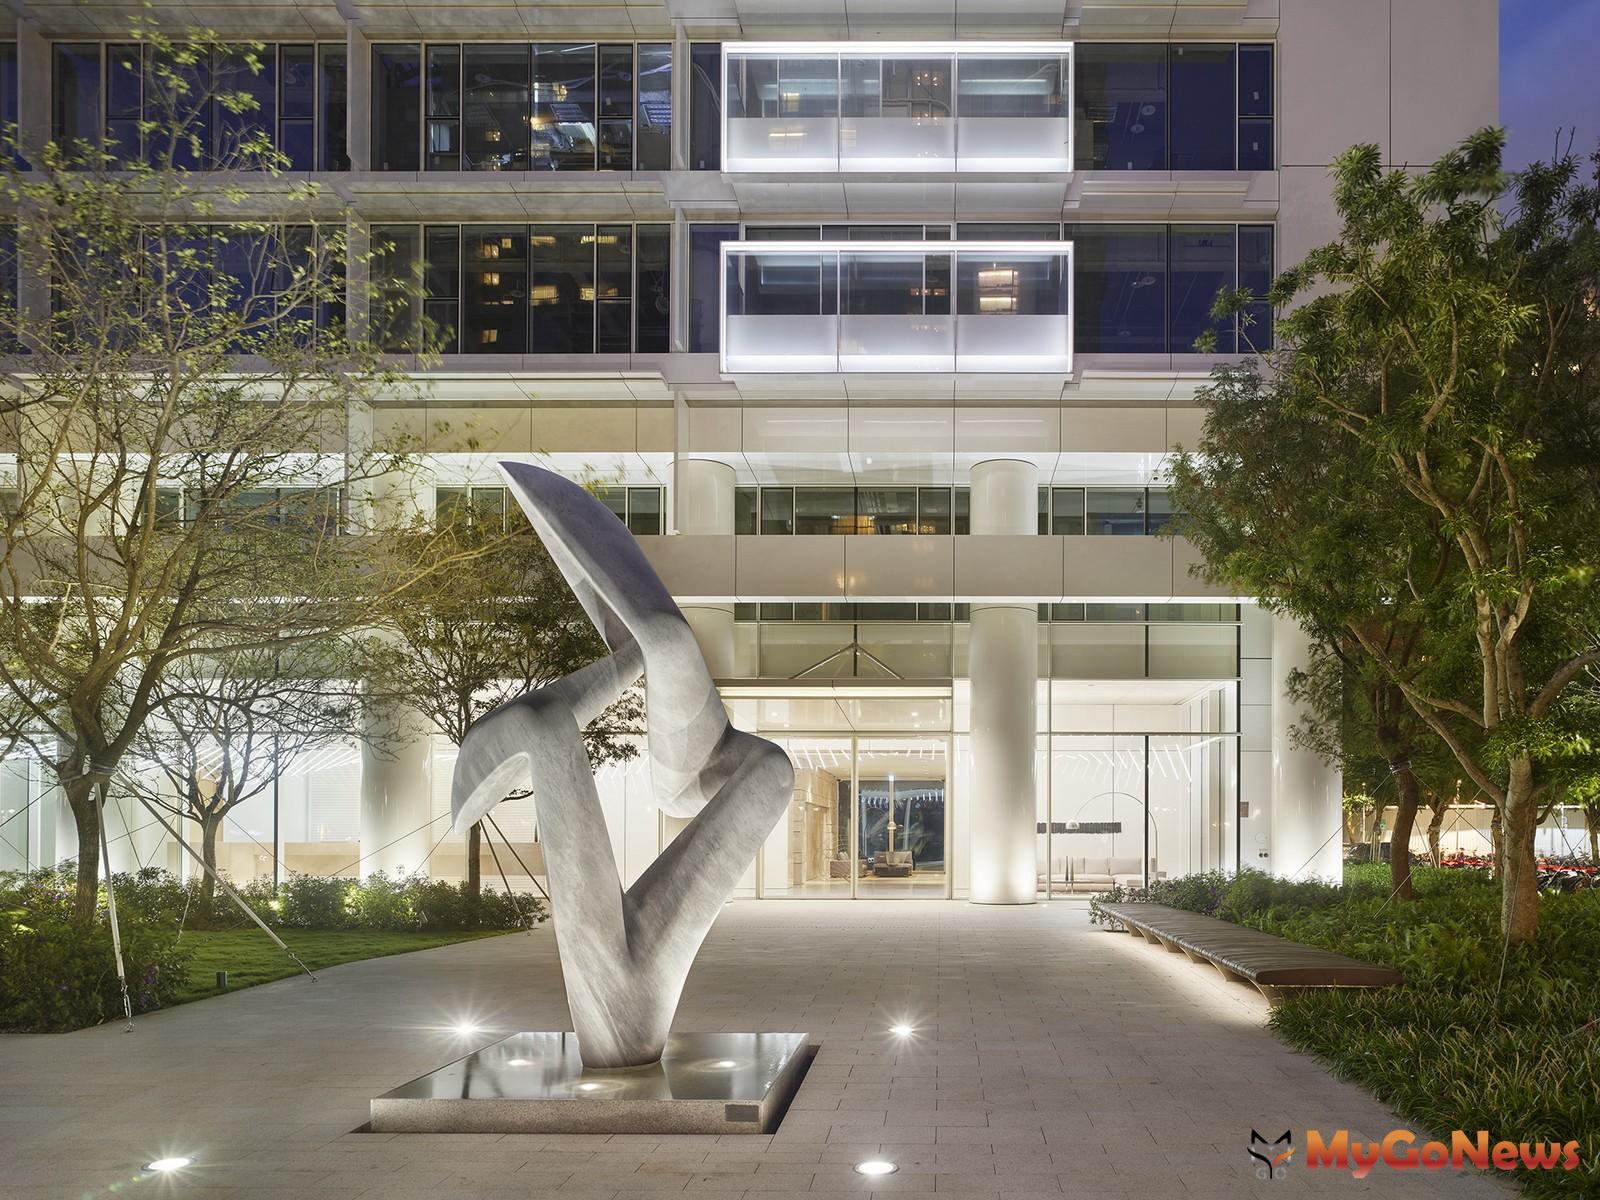 「55TIMELESS琢白」門廳前大尺度雕塑—美國現代主義雕塑家Richard Erdman作品「美德」。 MyGoNews房地產新聞 市場快訊